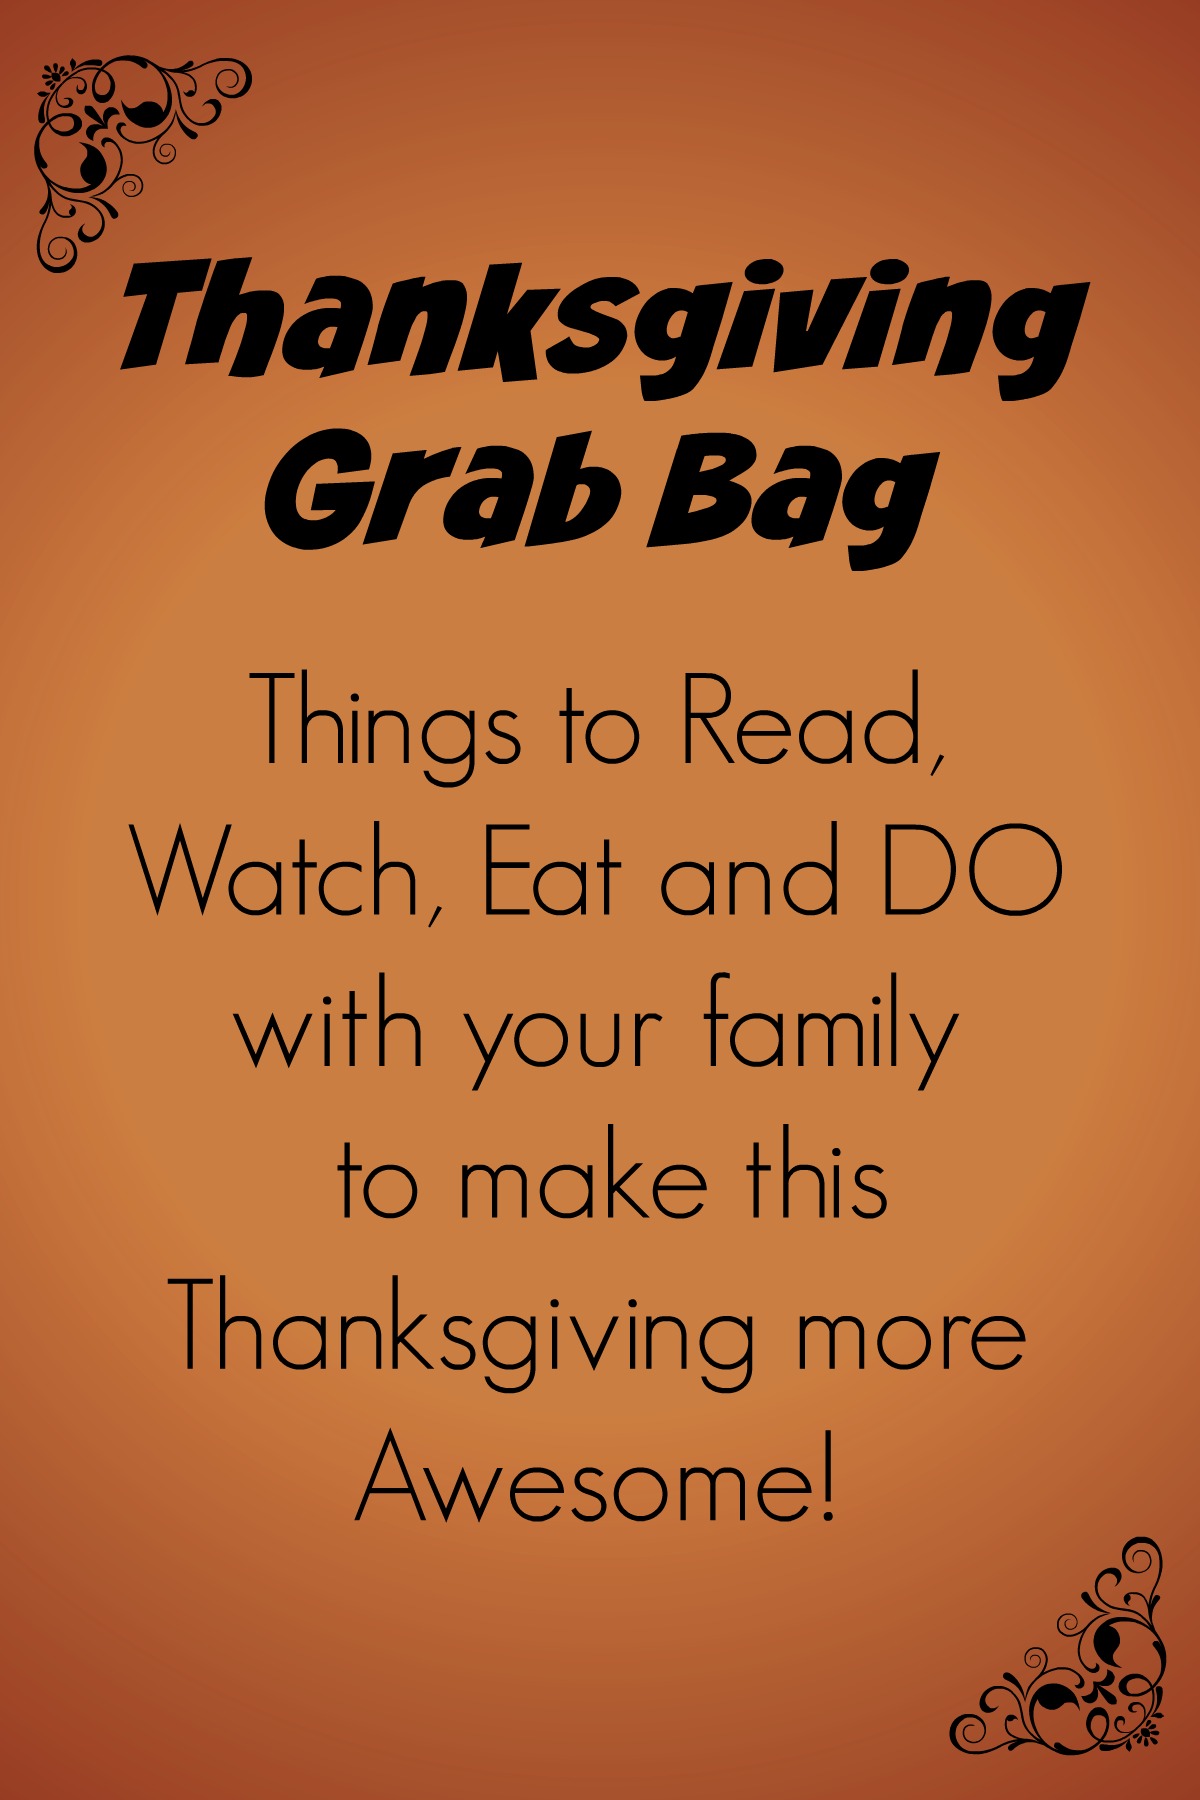 A Thanksgiving Grab Bag